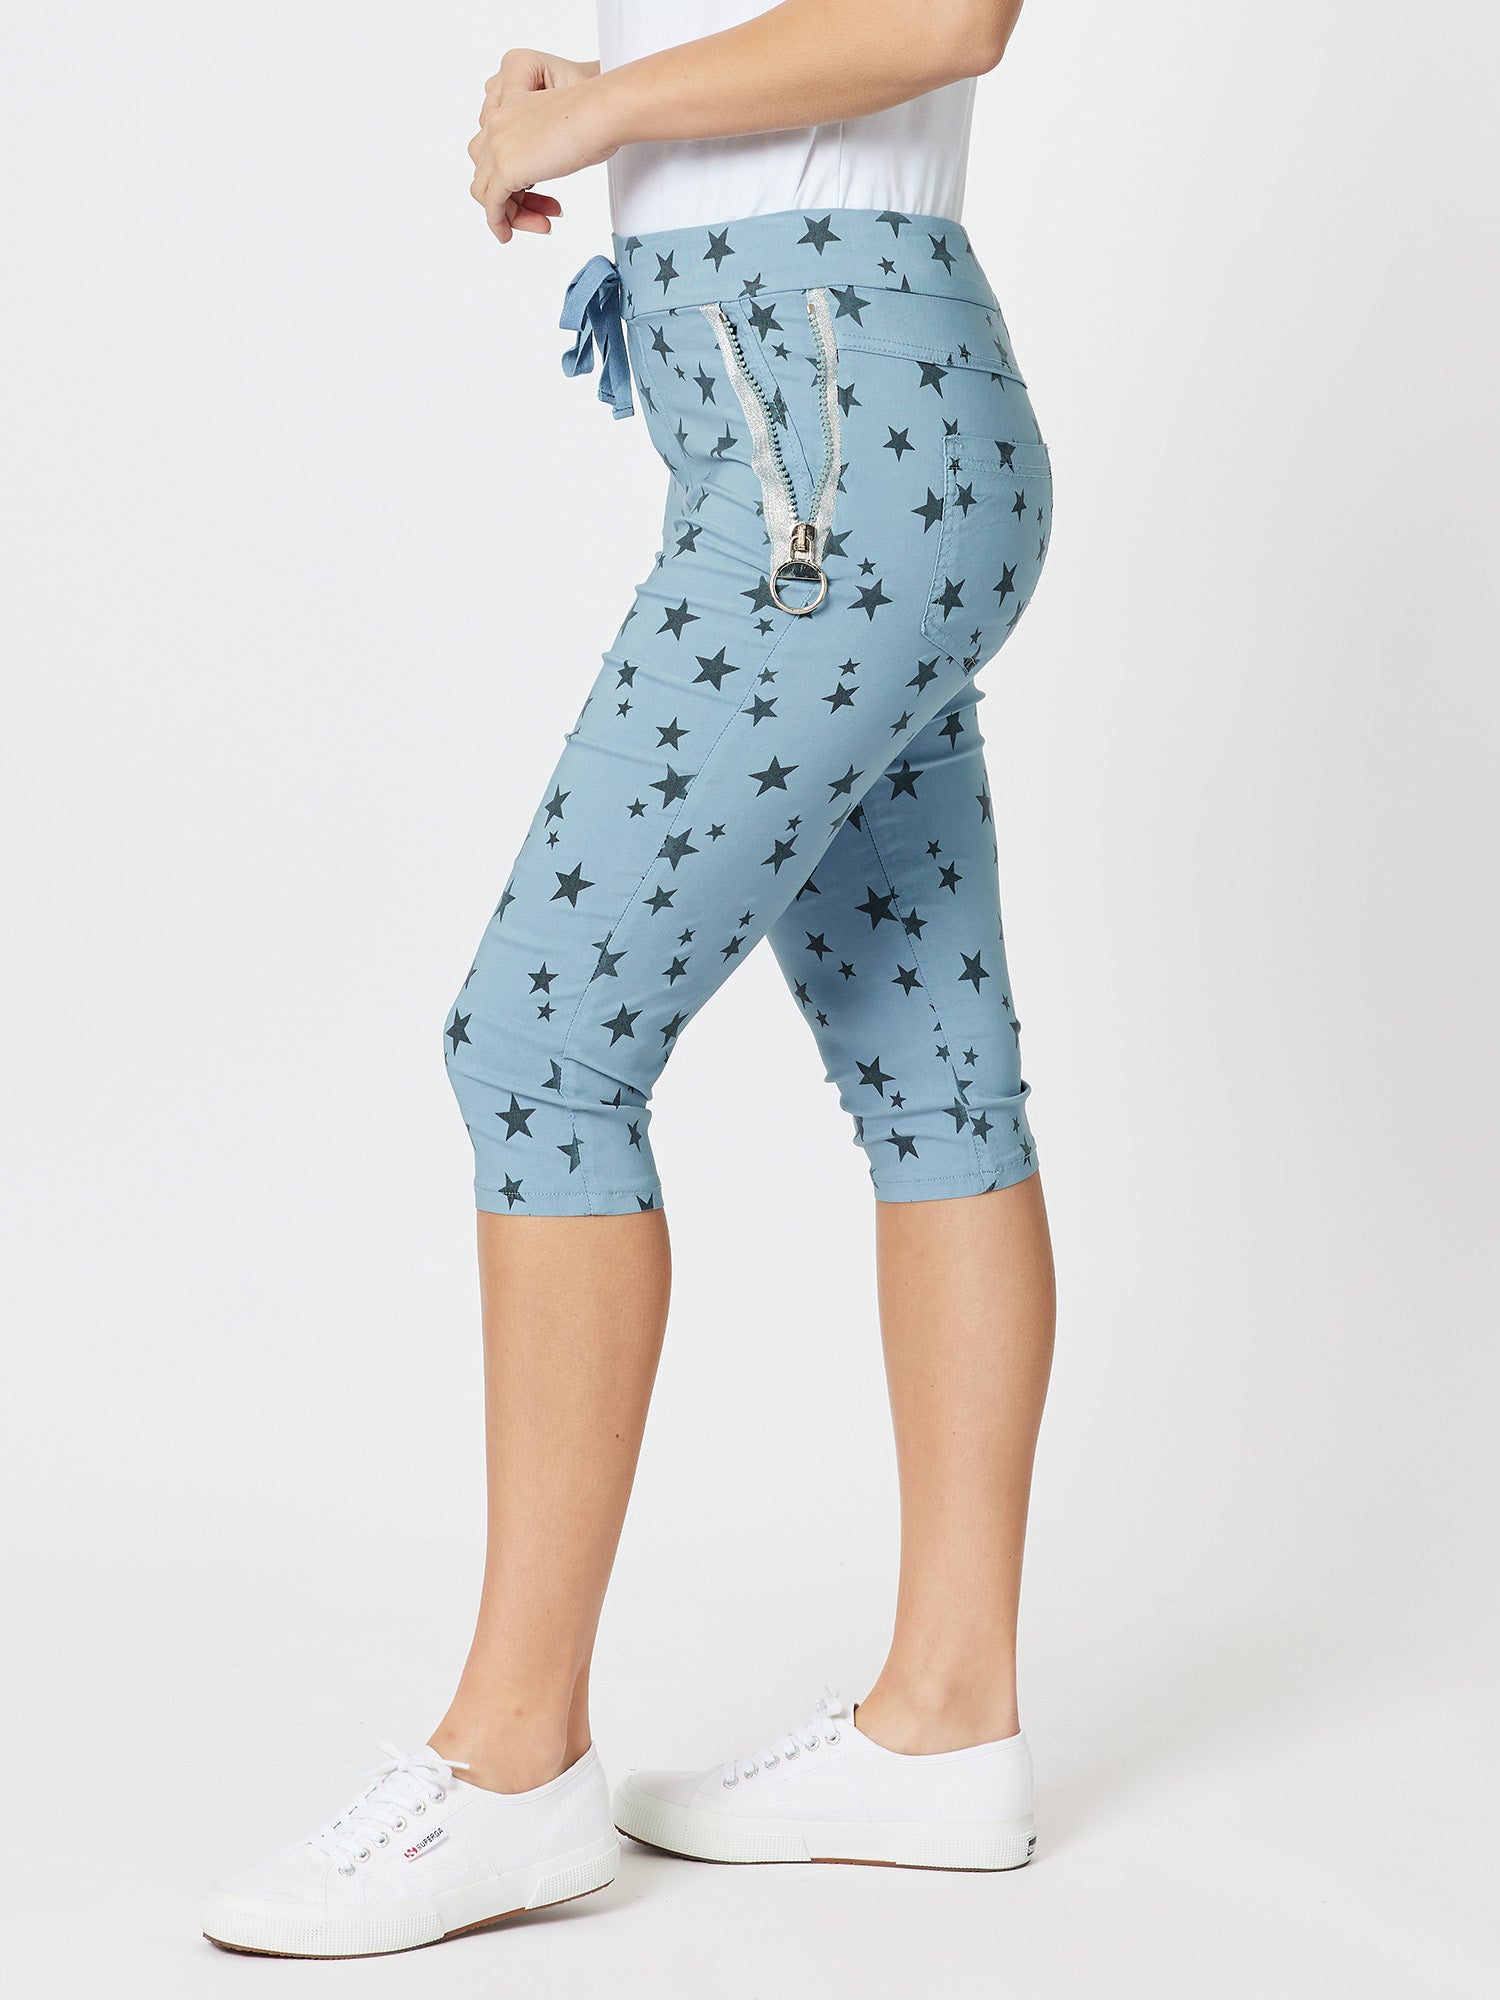 Crushed Star Print Shorts - Blue